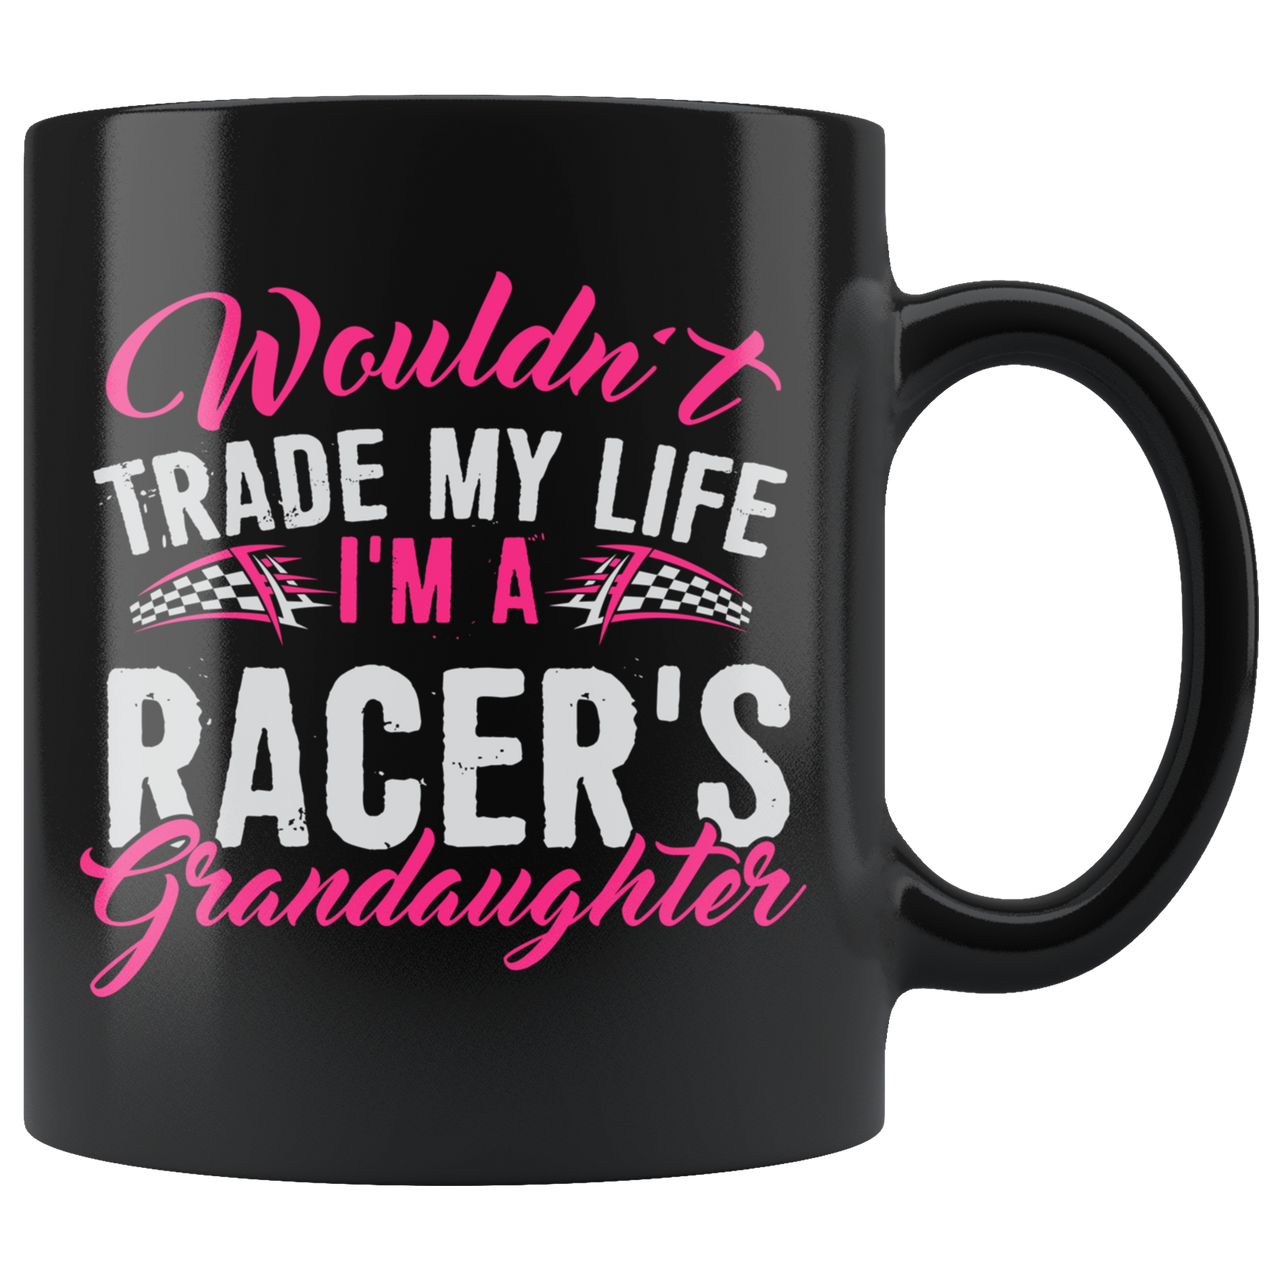 Wouldn't Trade My Life I'm A Racer's Granddaughter Mug!